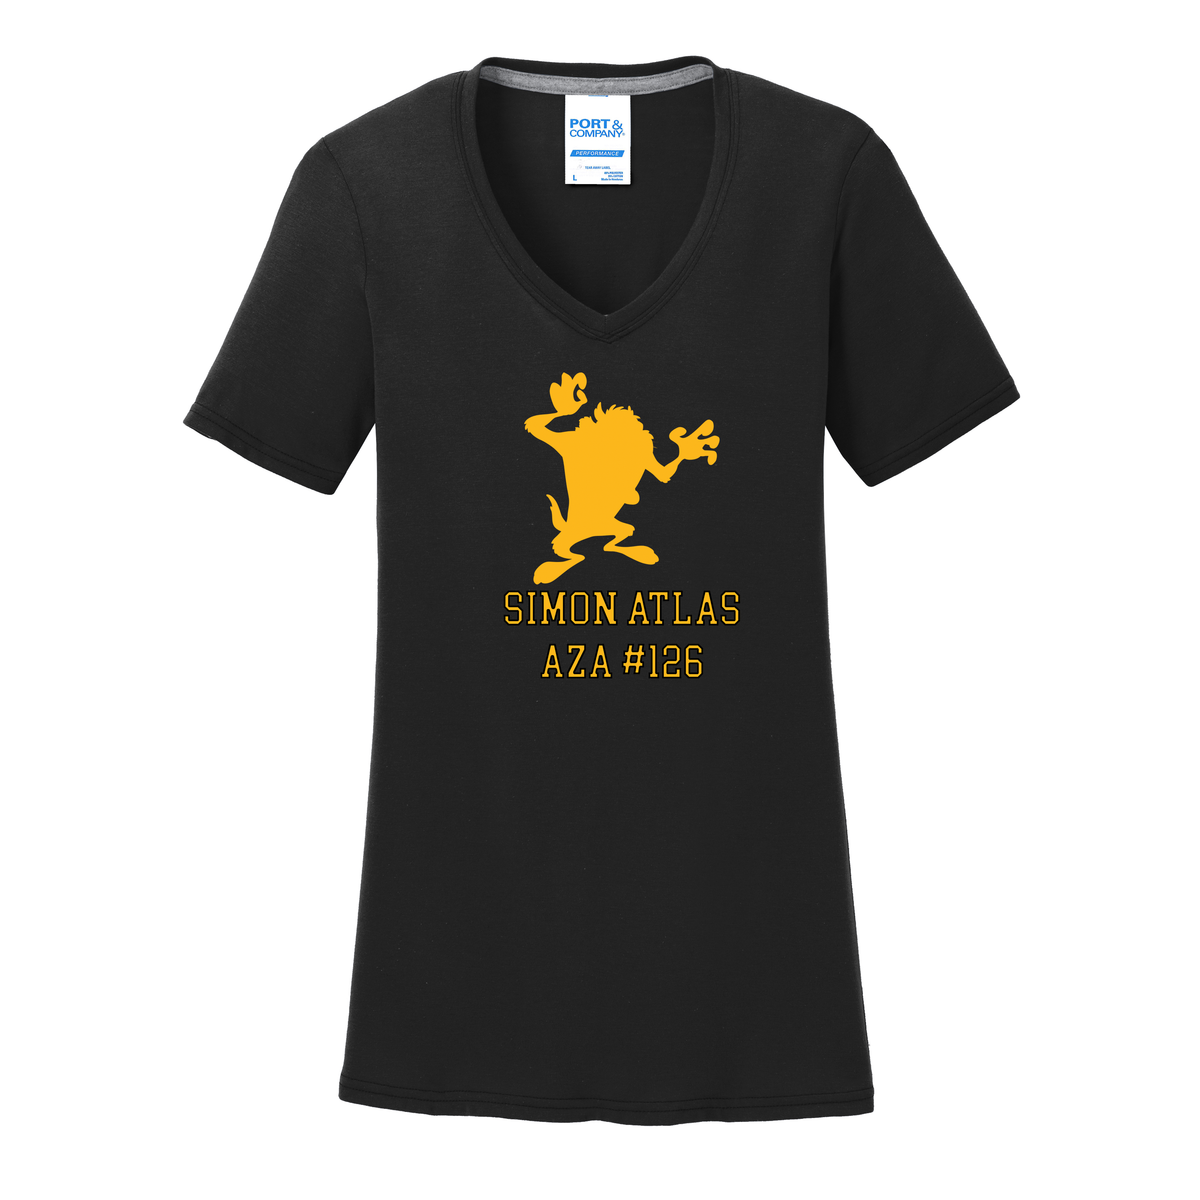 Simon Atlas Women's T-Shirt